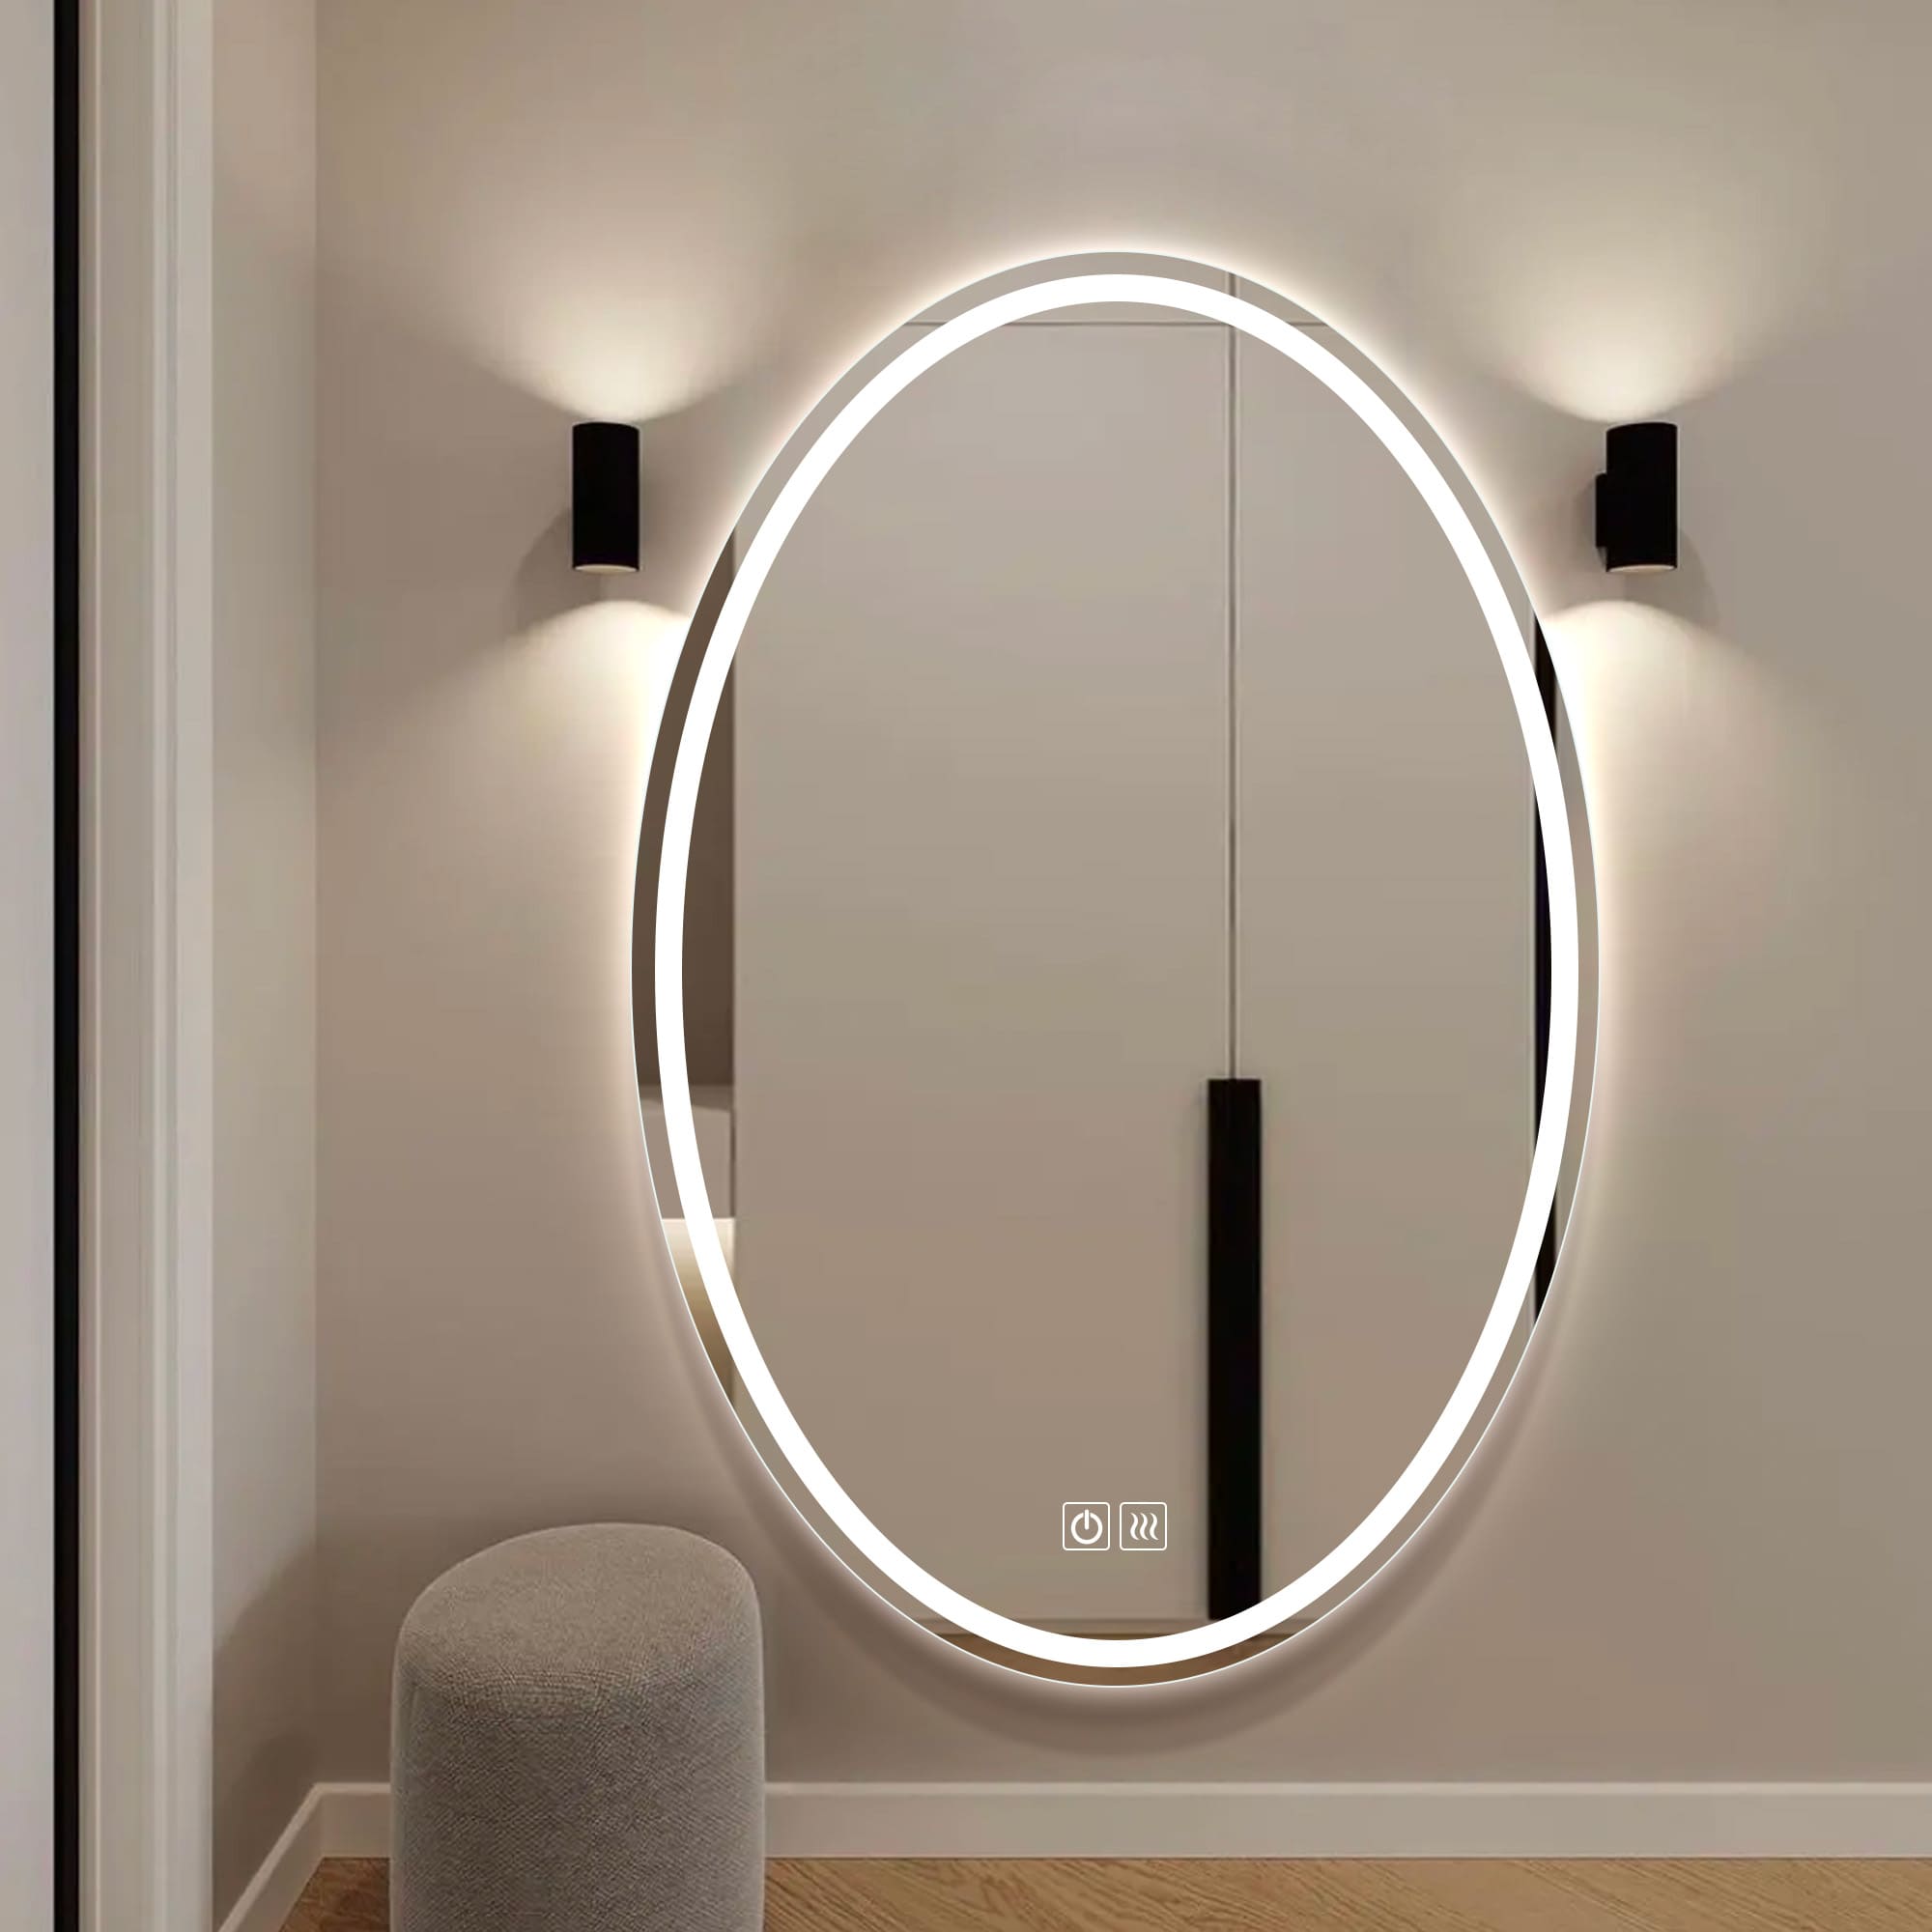 Pluto LED Mirror for hallway